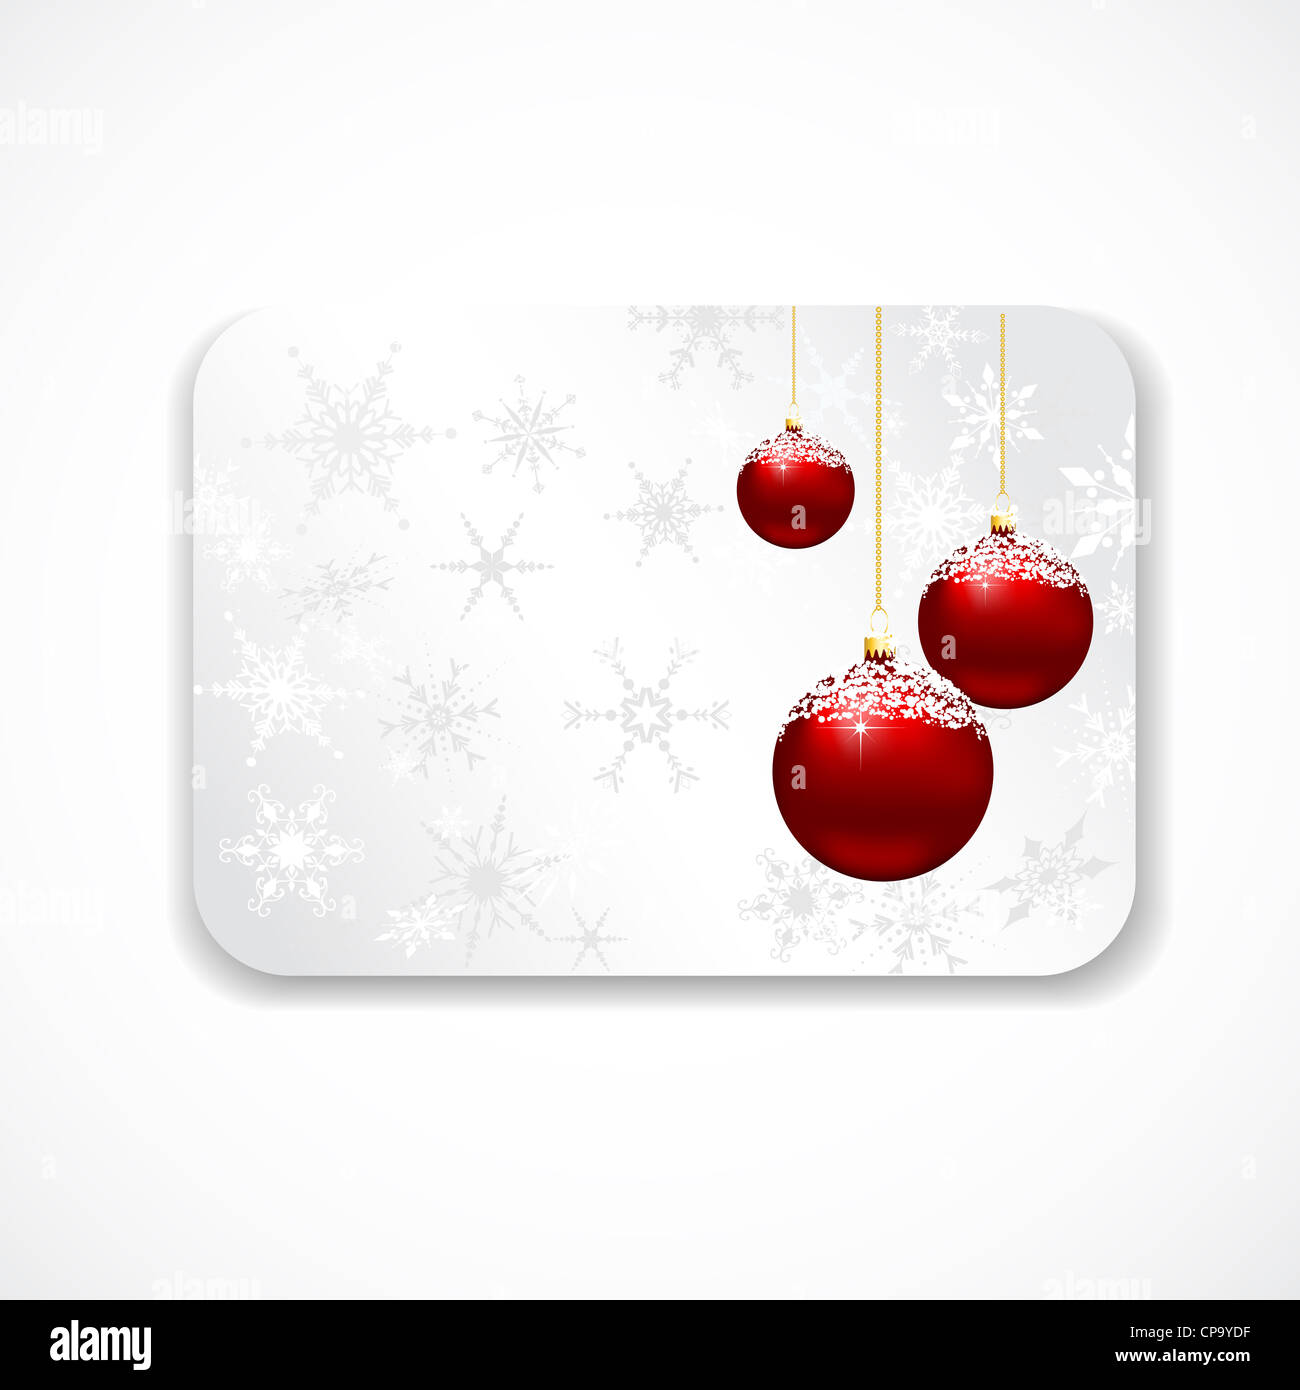  Buono Regalo  - Stampa - Logo  - Natale: Gift  Cards